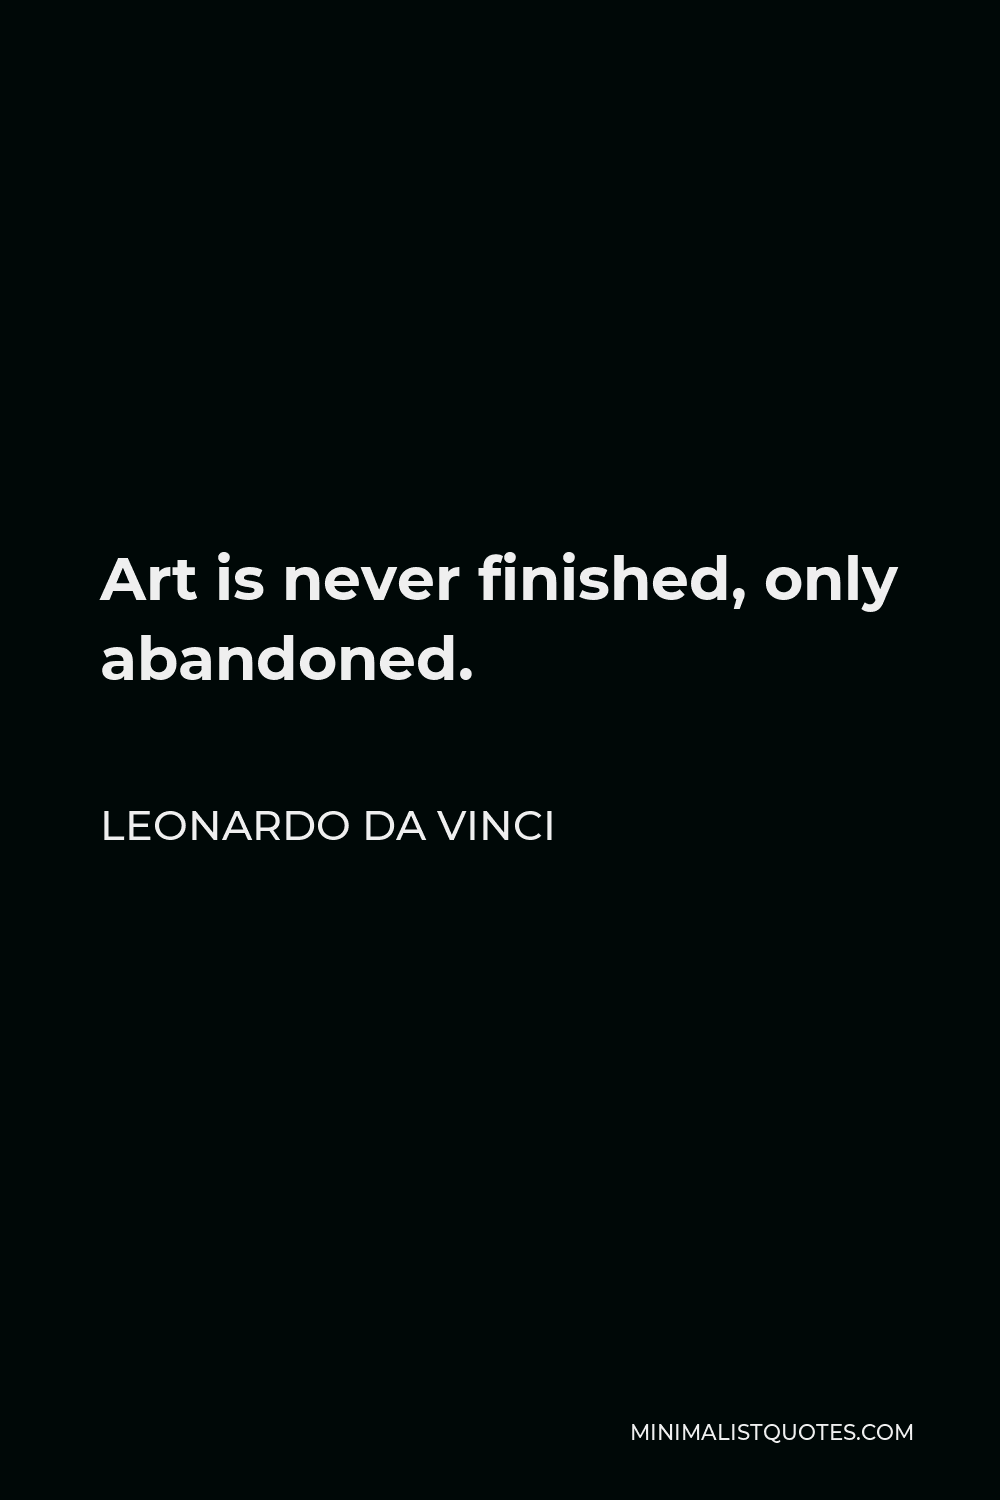 Leonardo da Vinci Quote - Art is never finished, only abandoned.